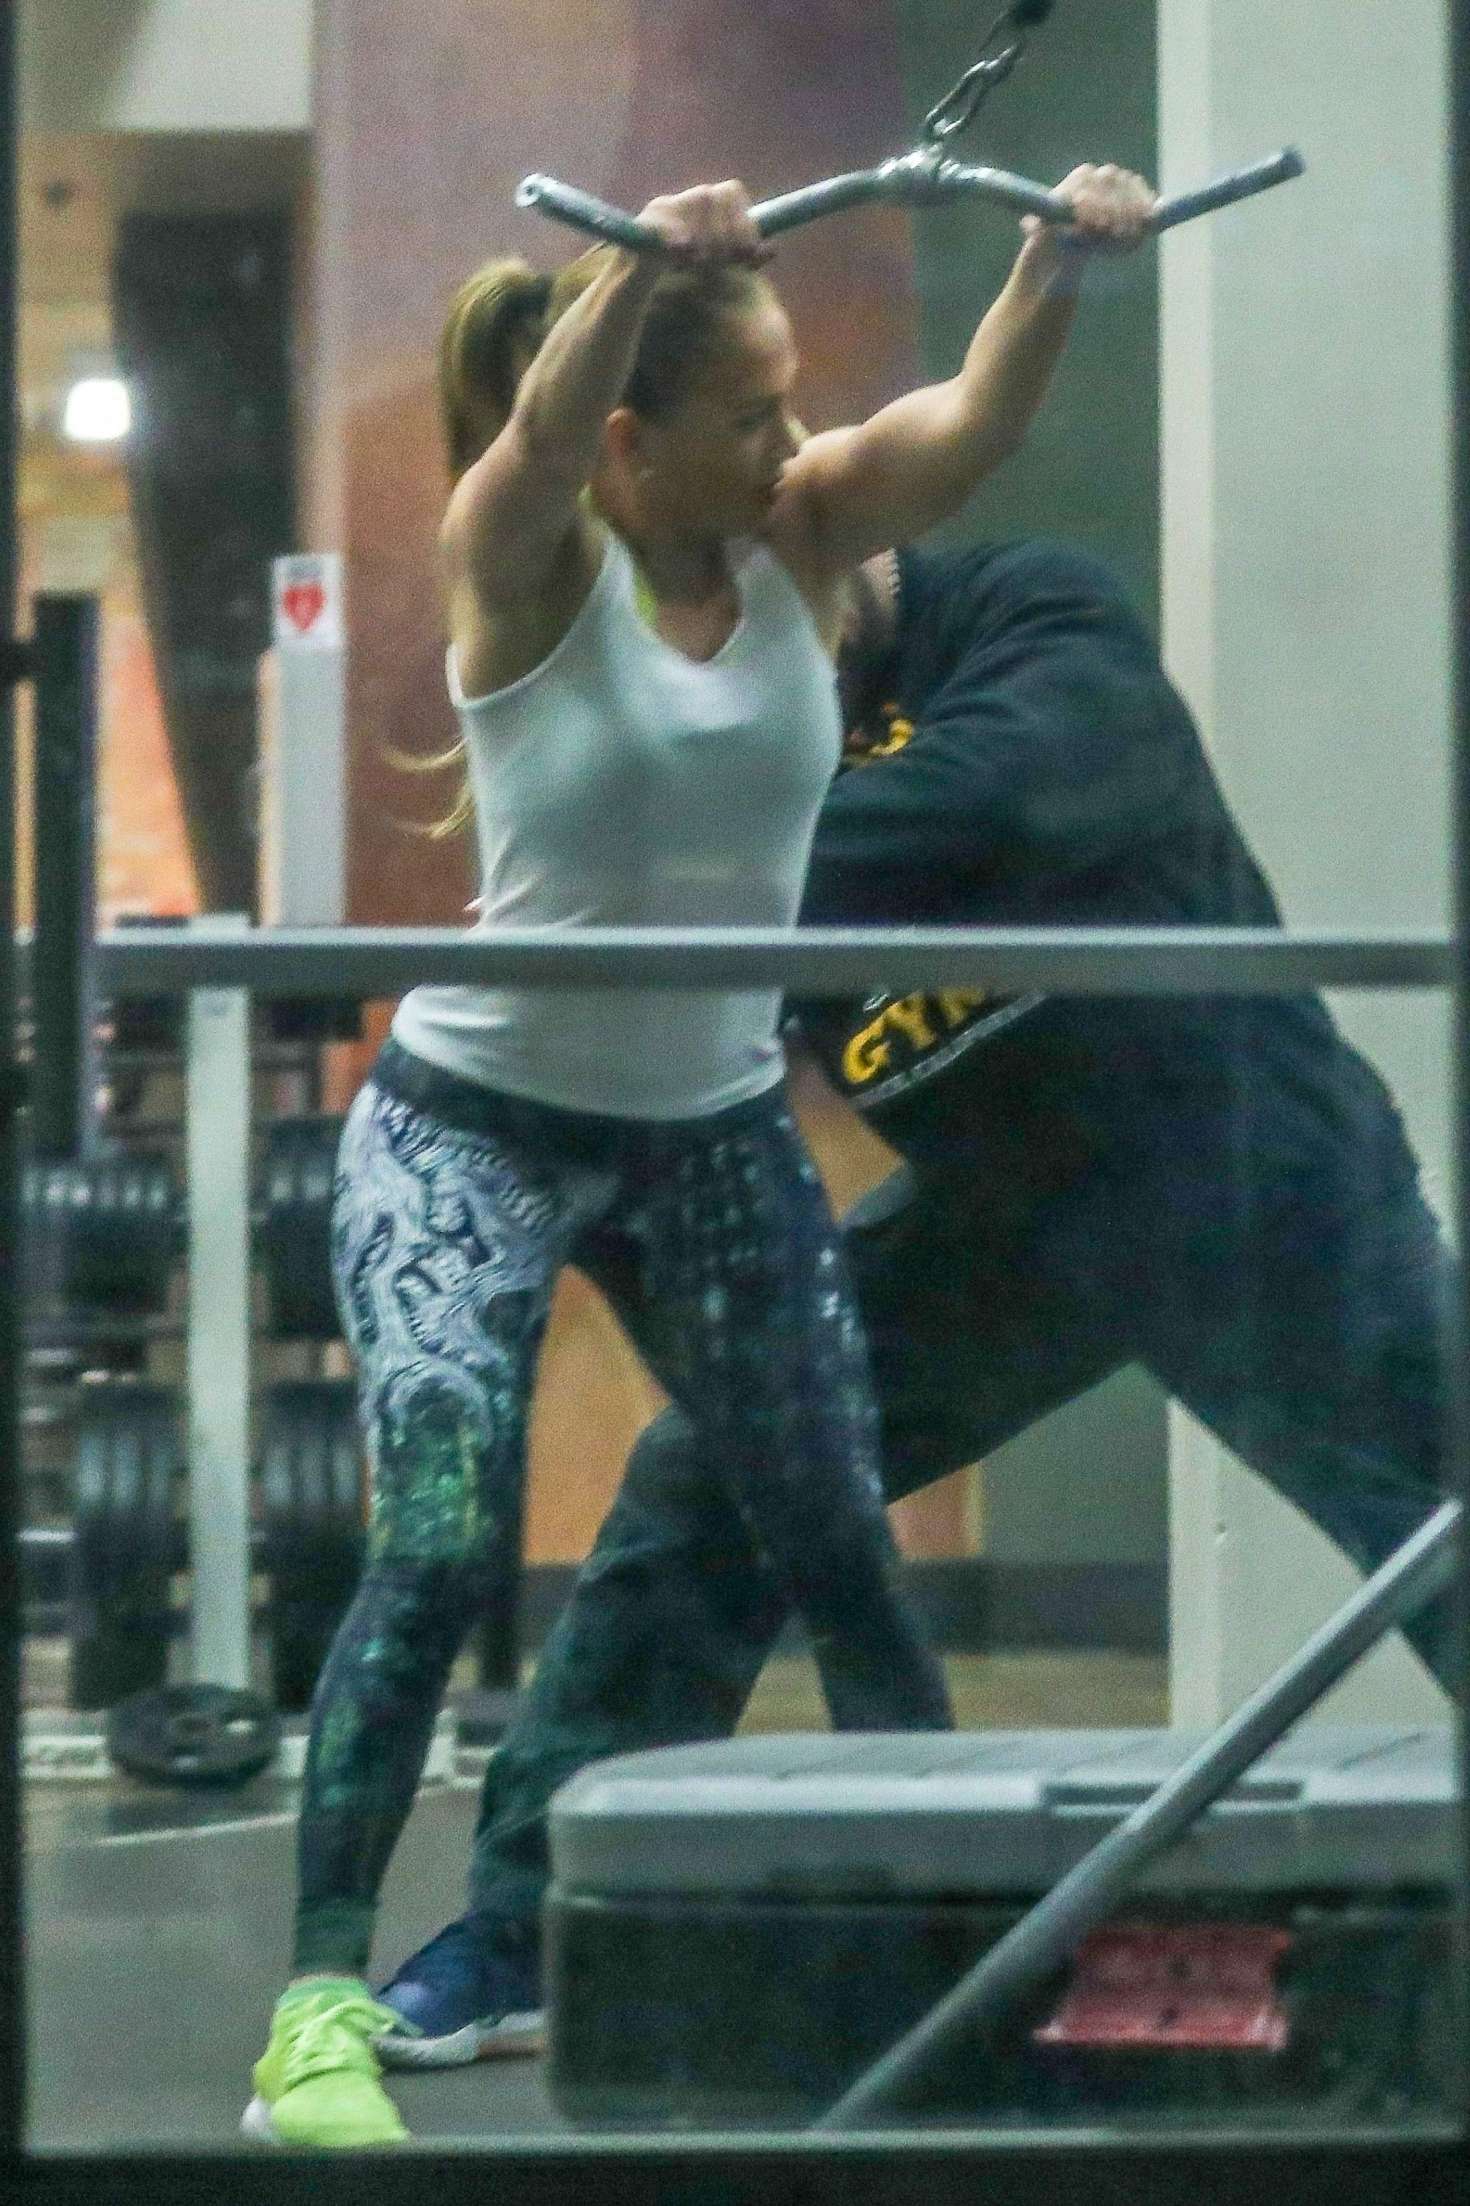 Jennifer Lopez â€“ Morning workout in Santa Monica